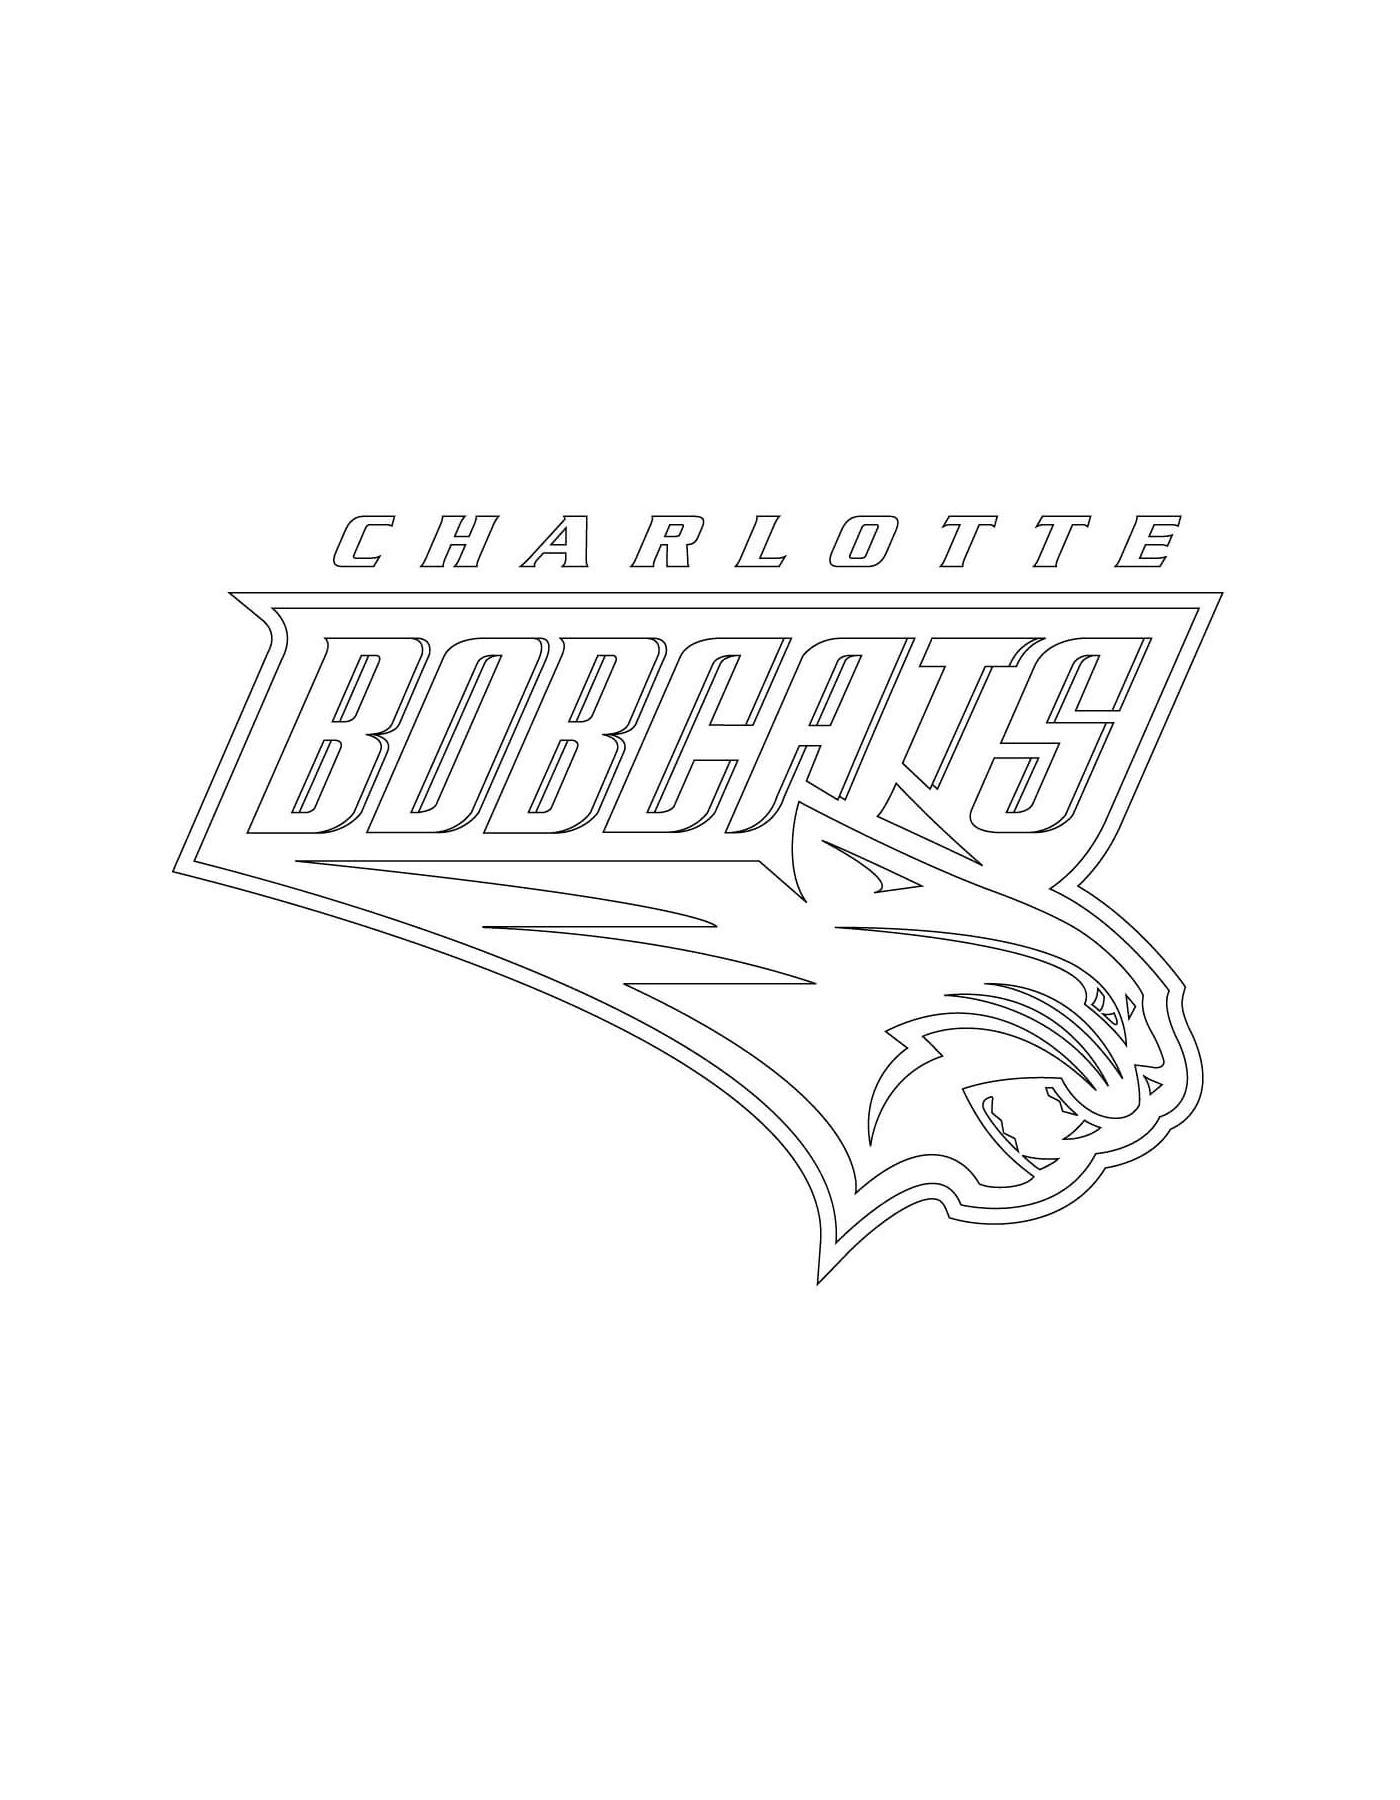  El logo de los Charlotte Bobcats de la NBA 